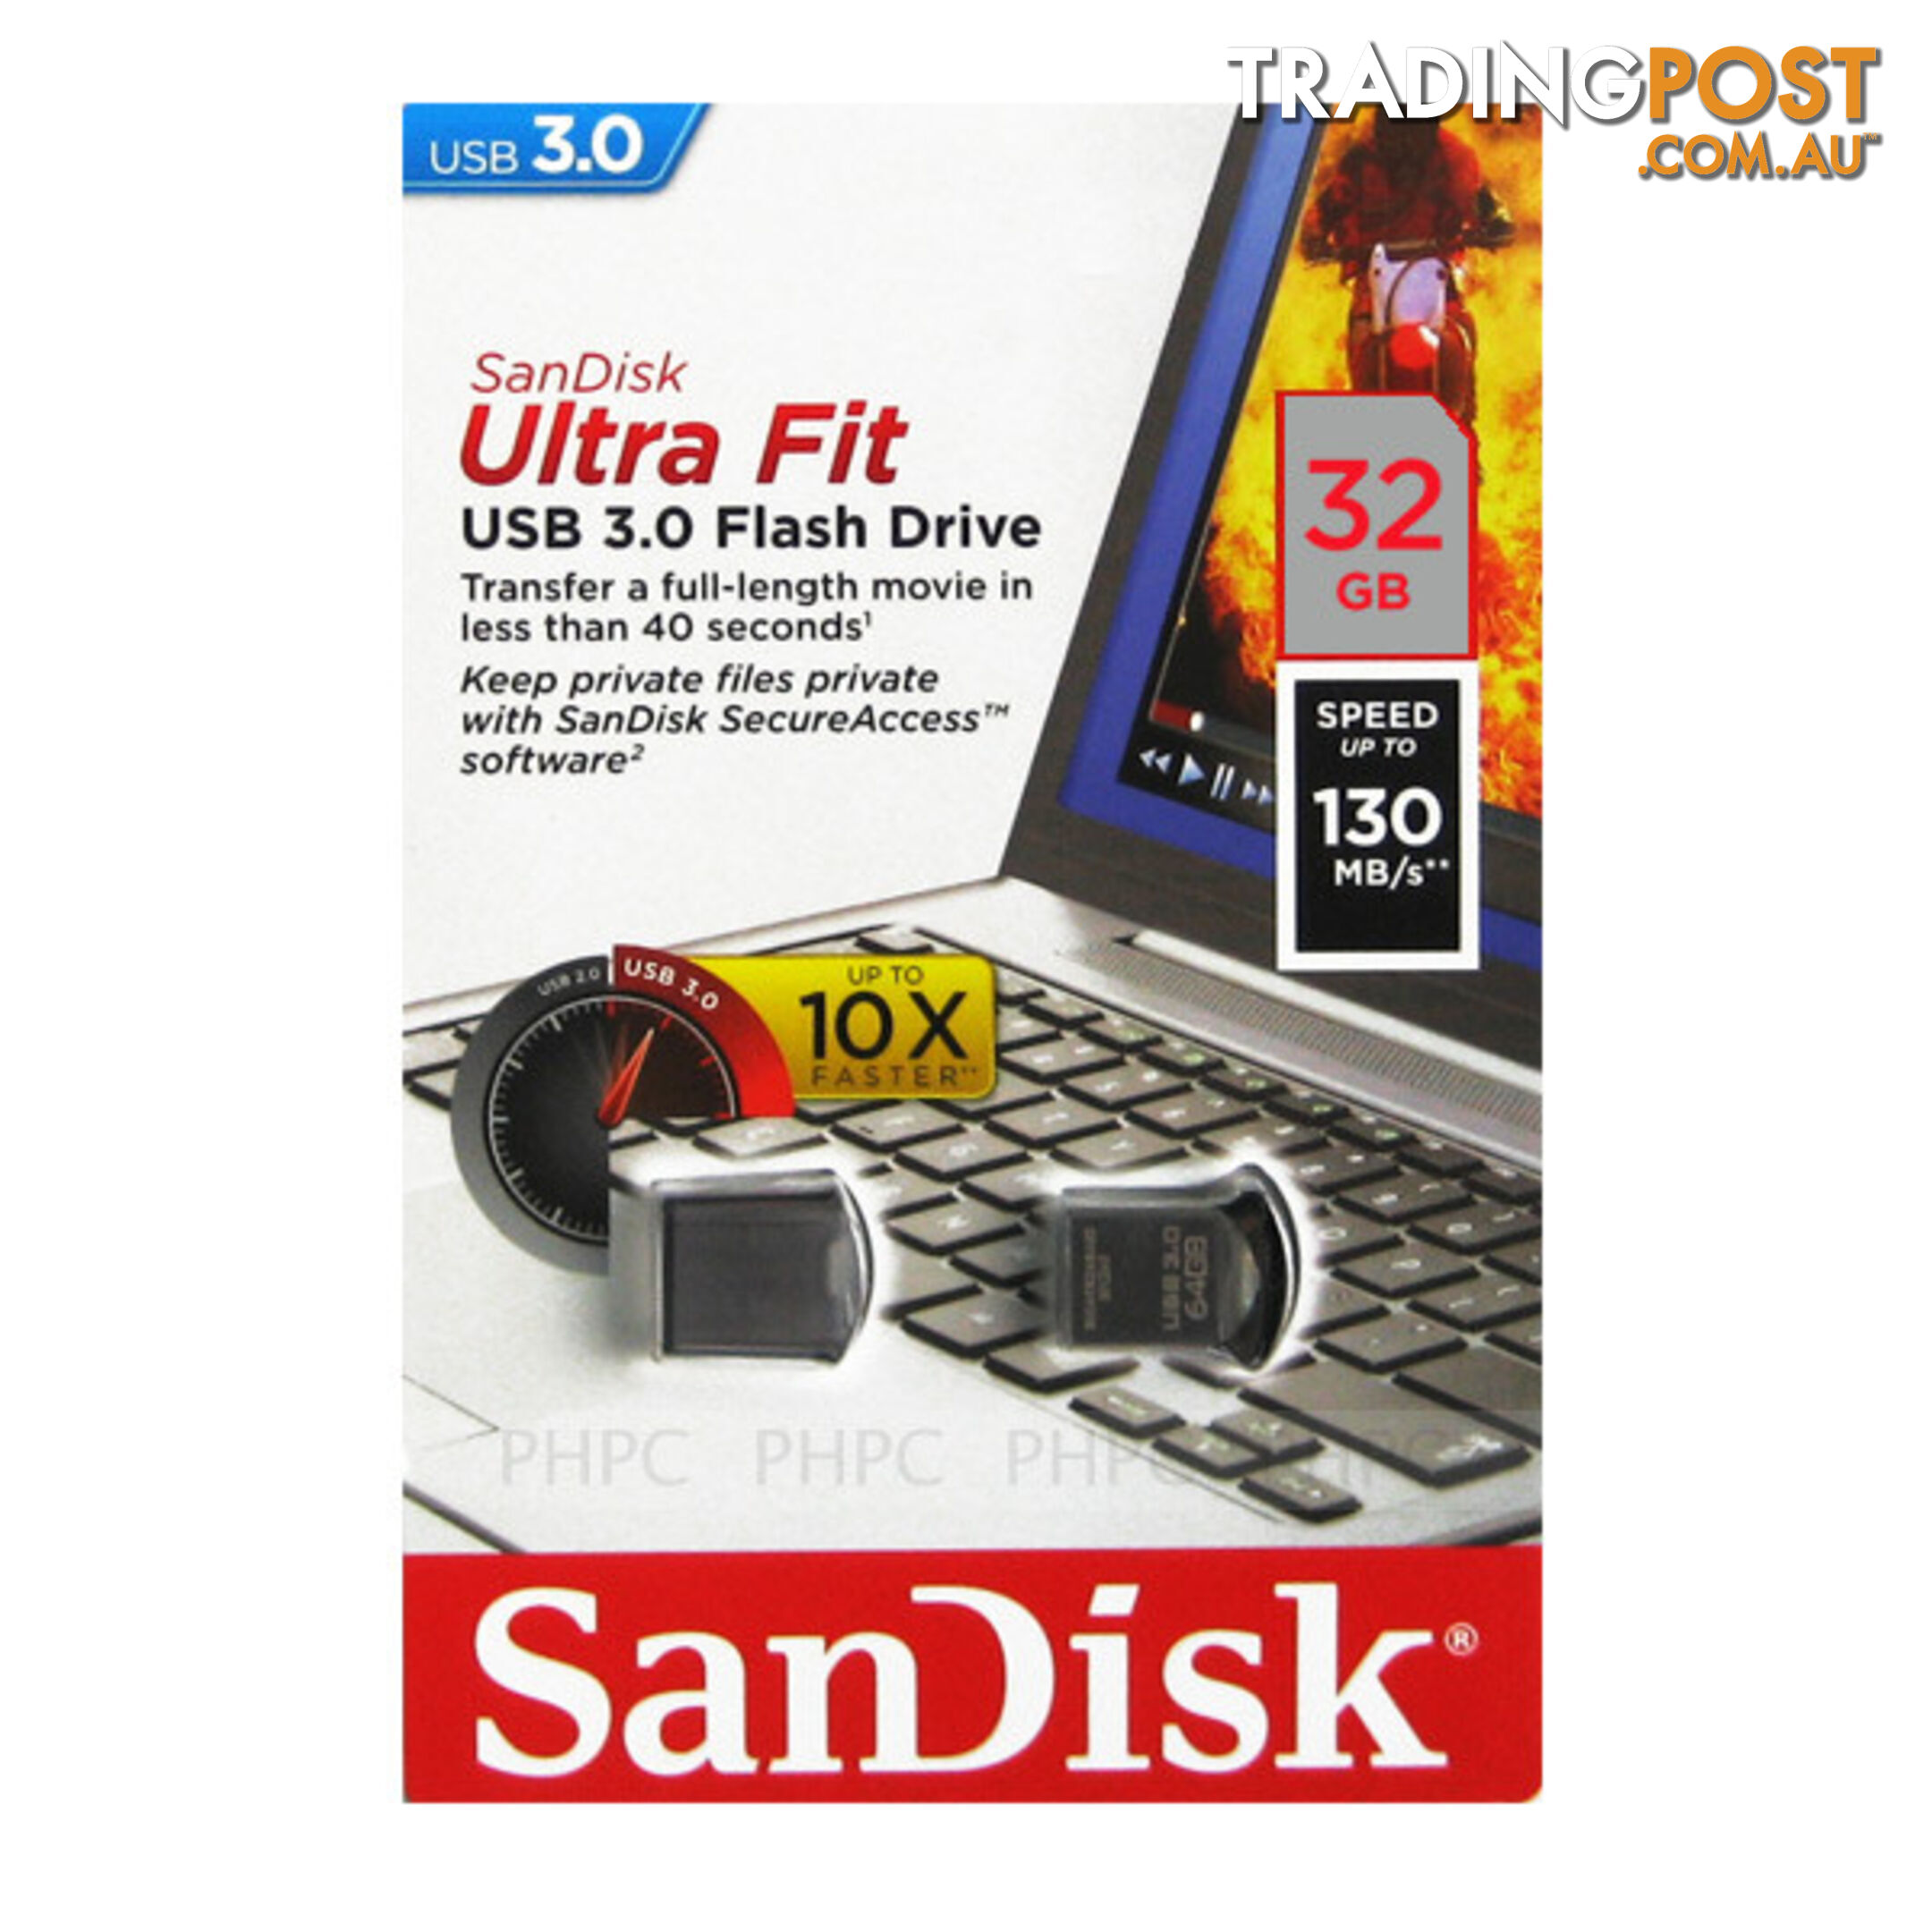 SanDisk Extreme CZ80 32GB USB 3.0 Flash Drive